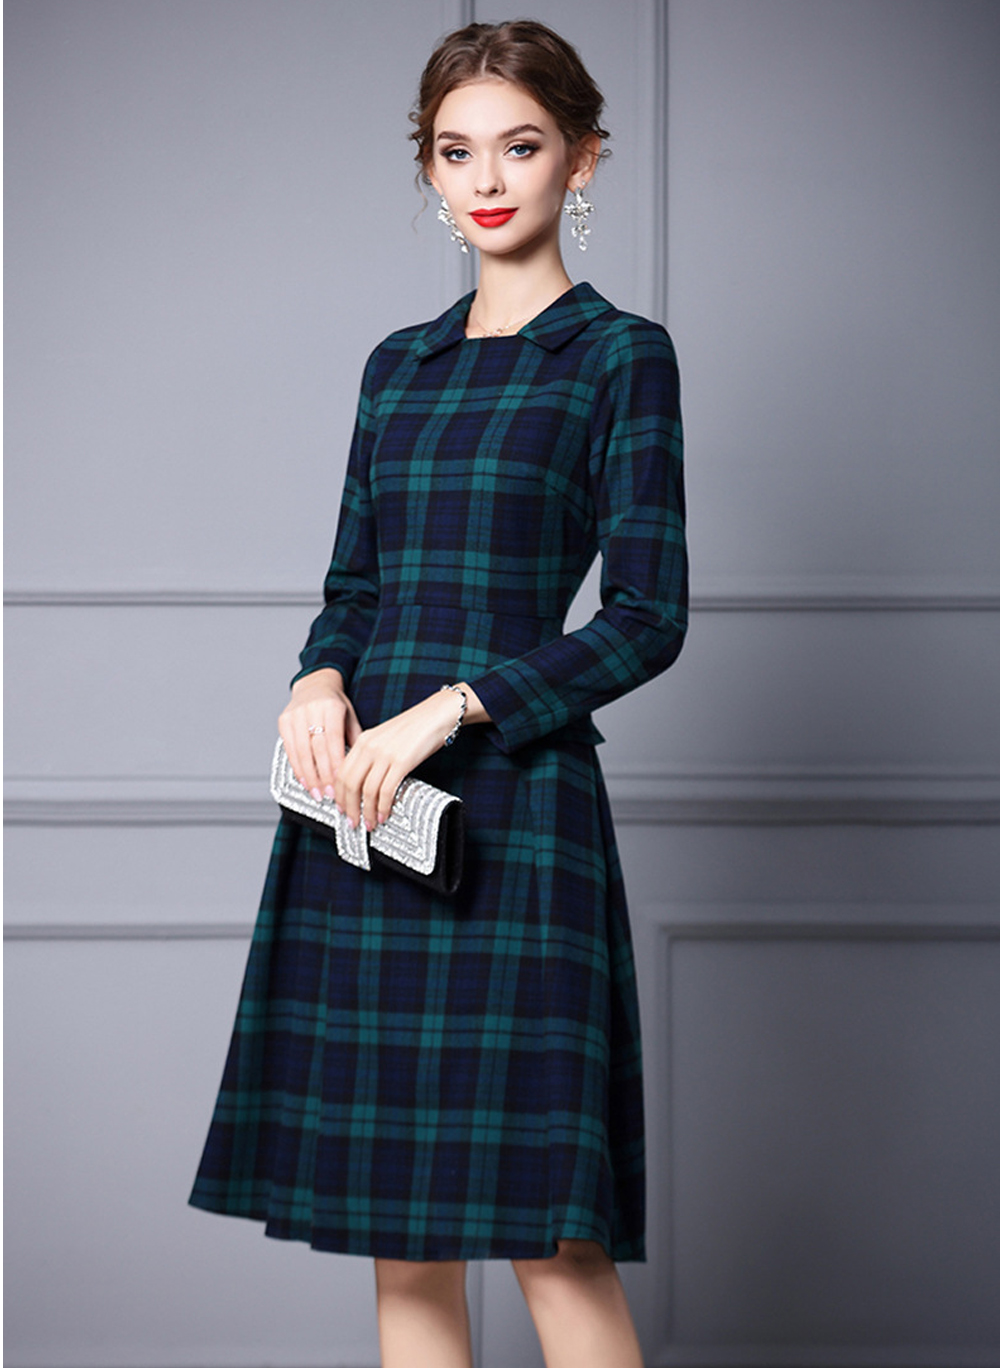 Flattering Midi Dress in Classic Long-Sleeved Black Watch Tartan Design